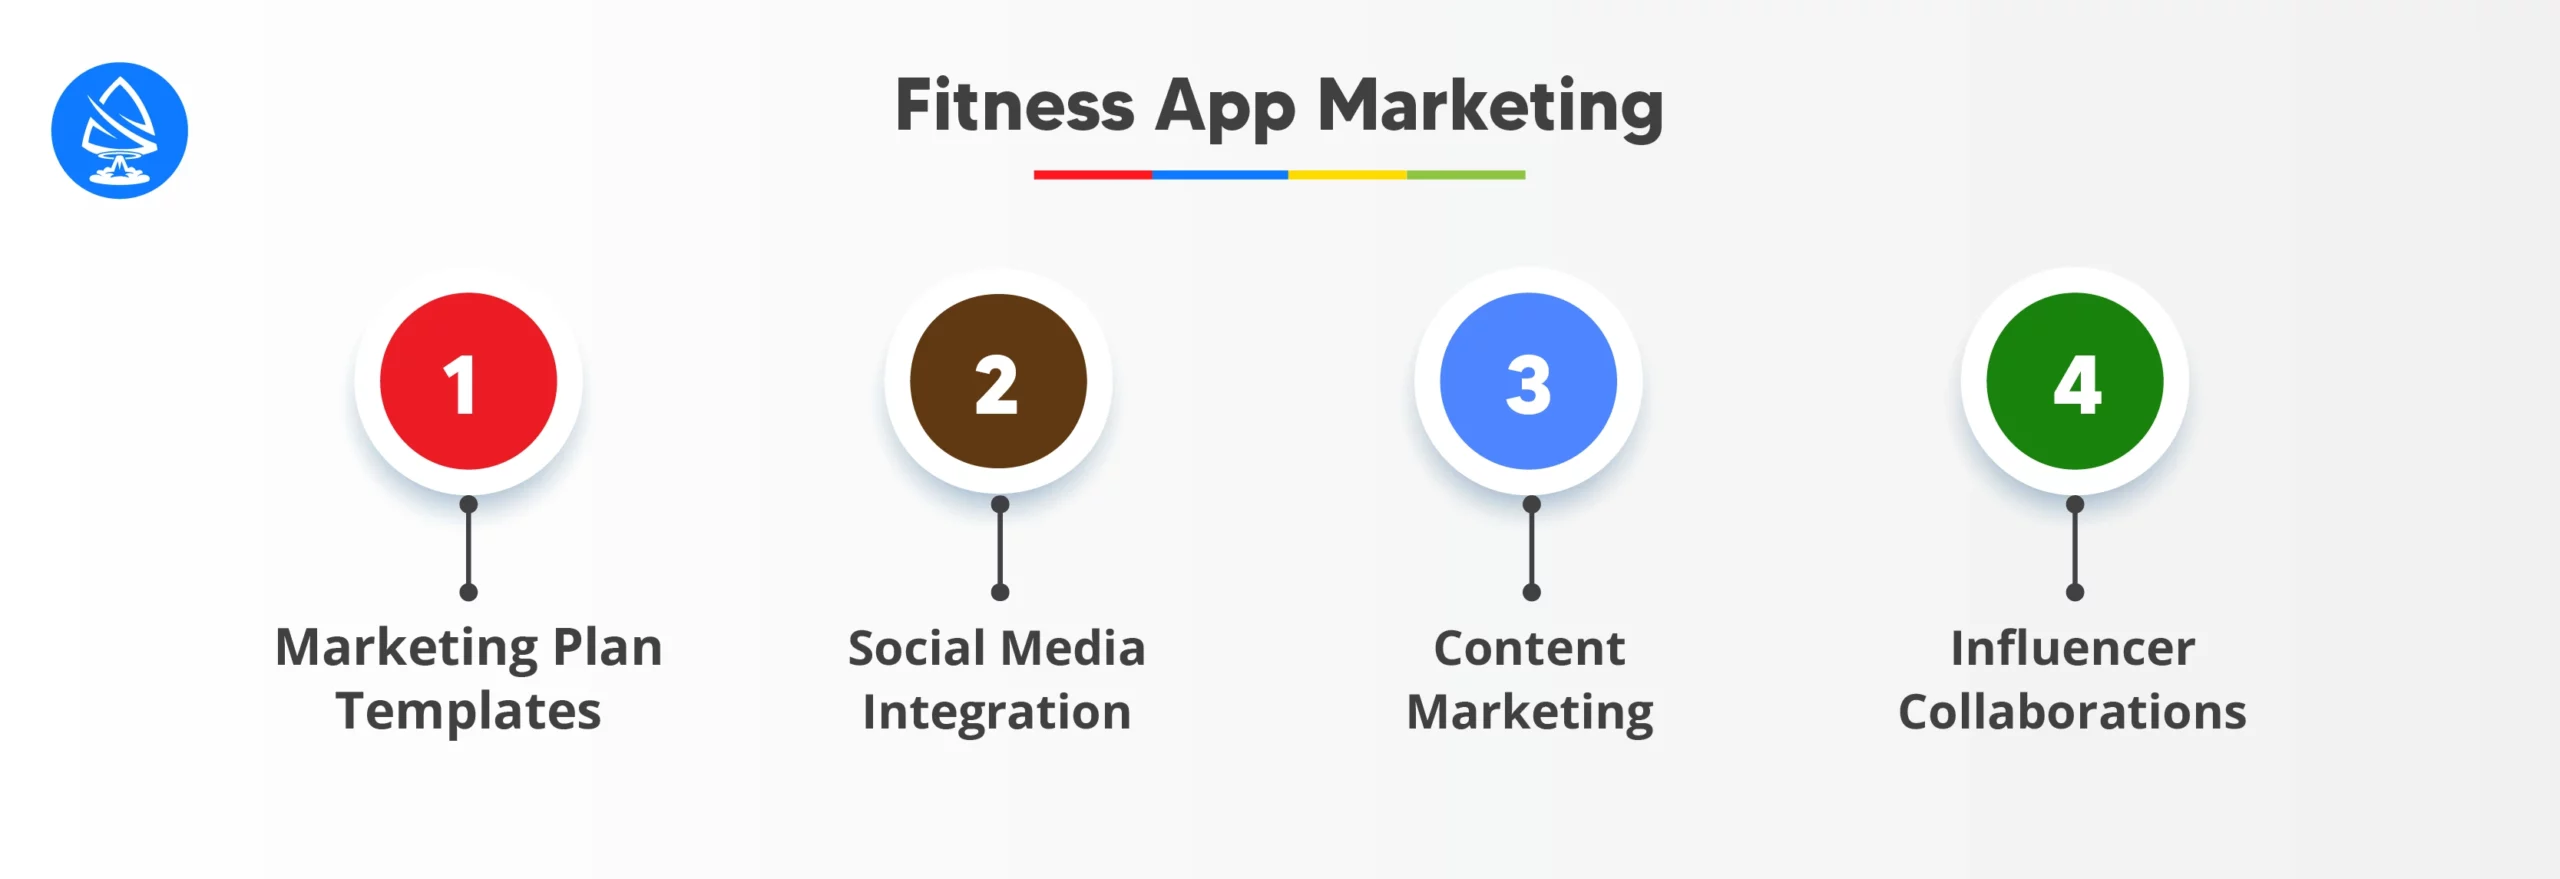 Fitness App Marketing